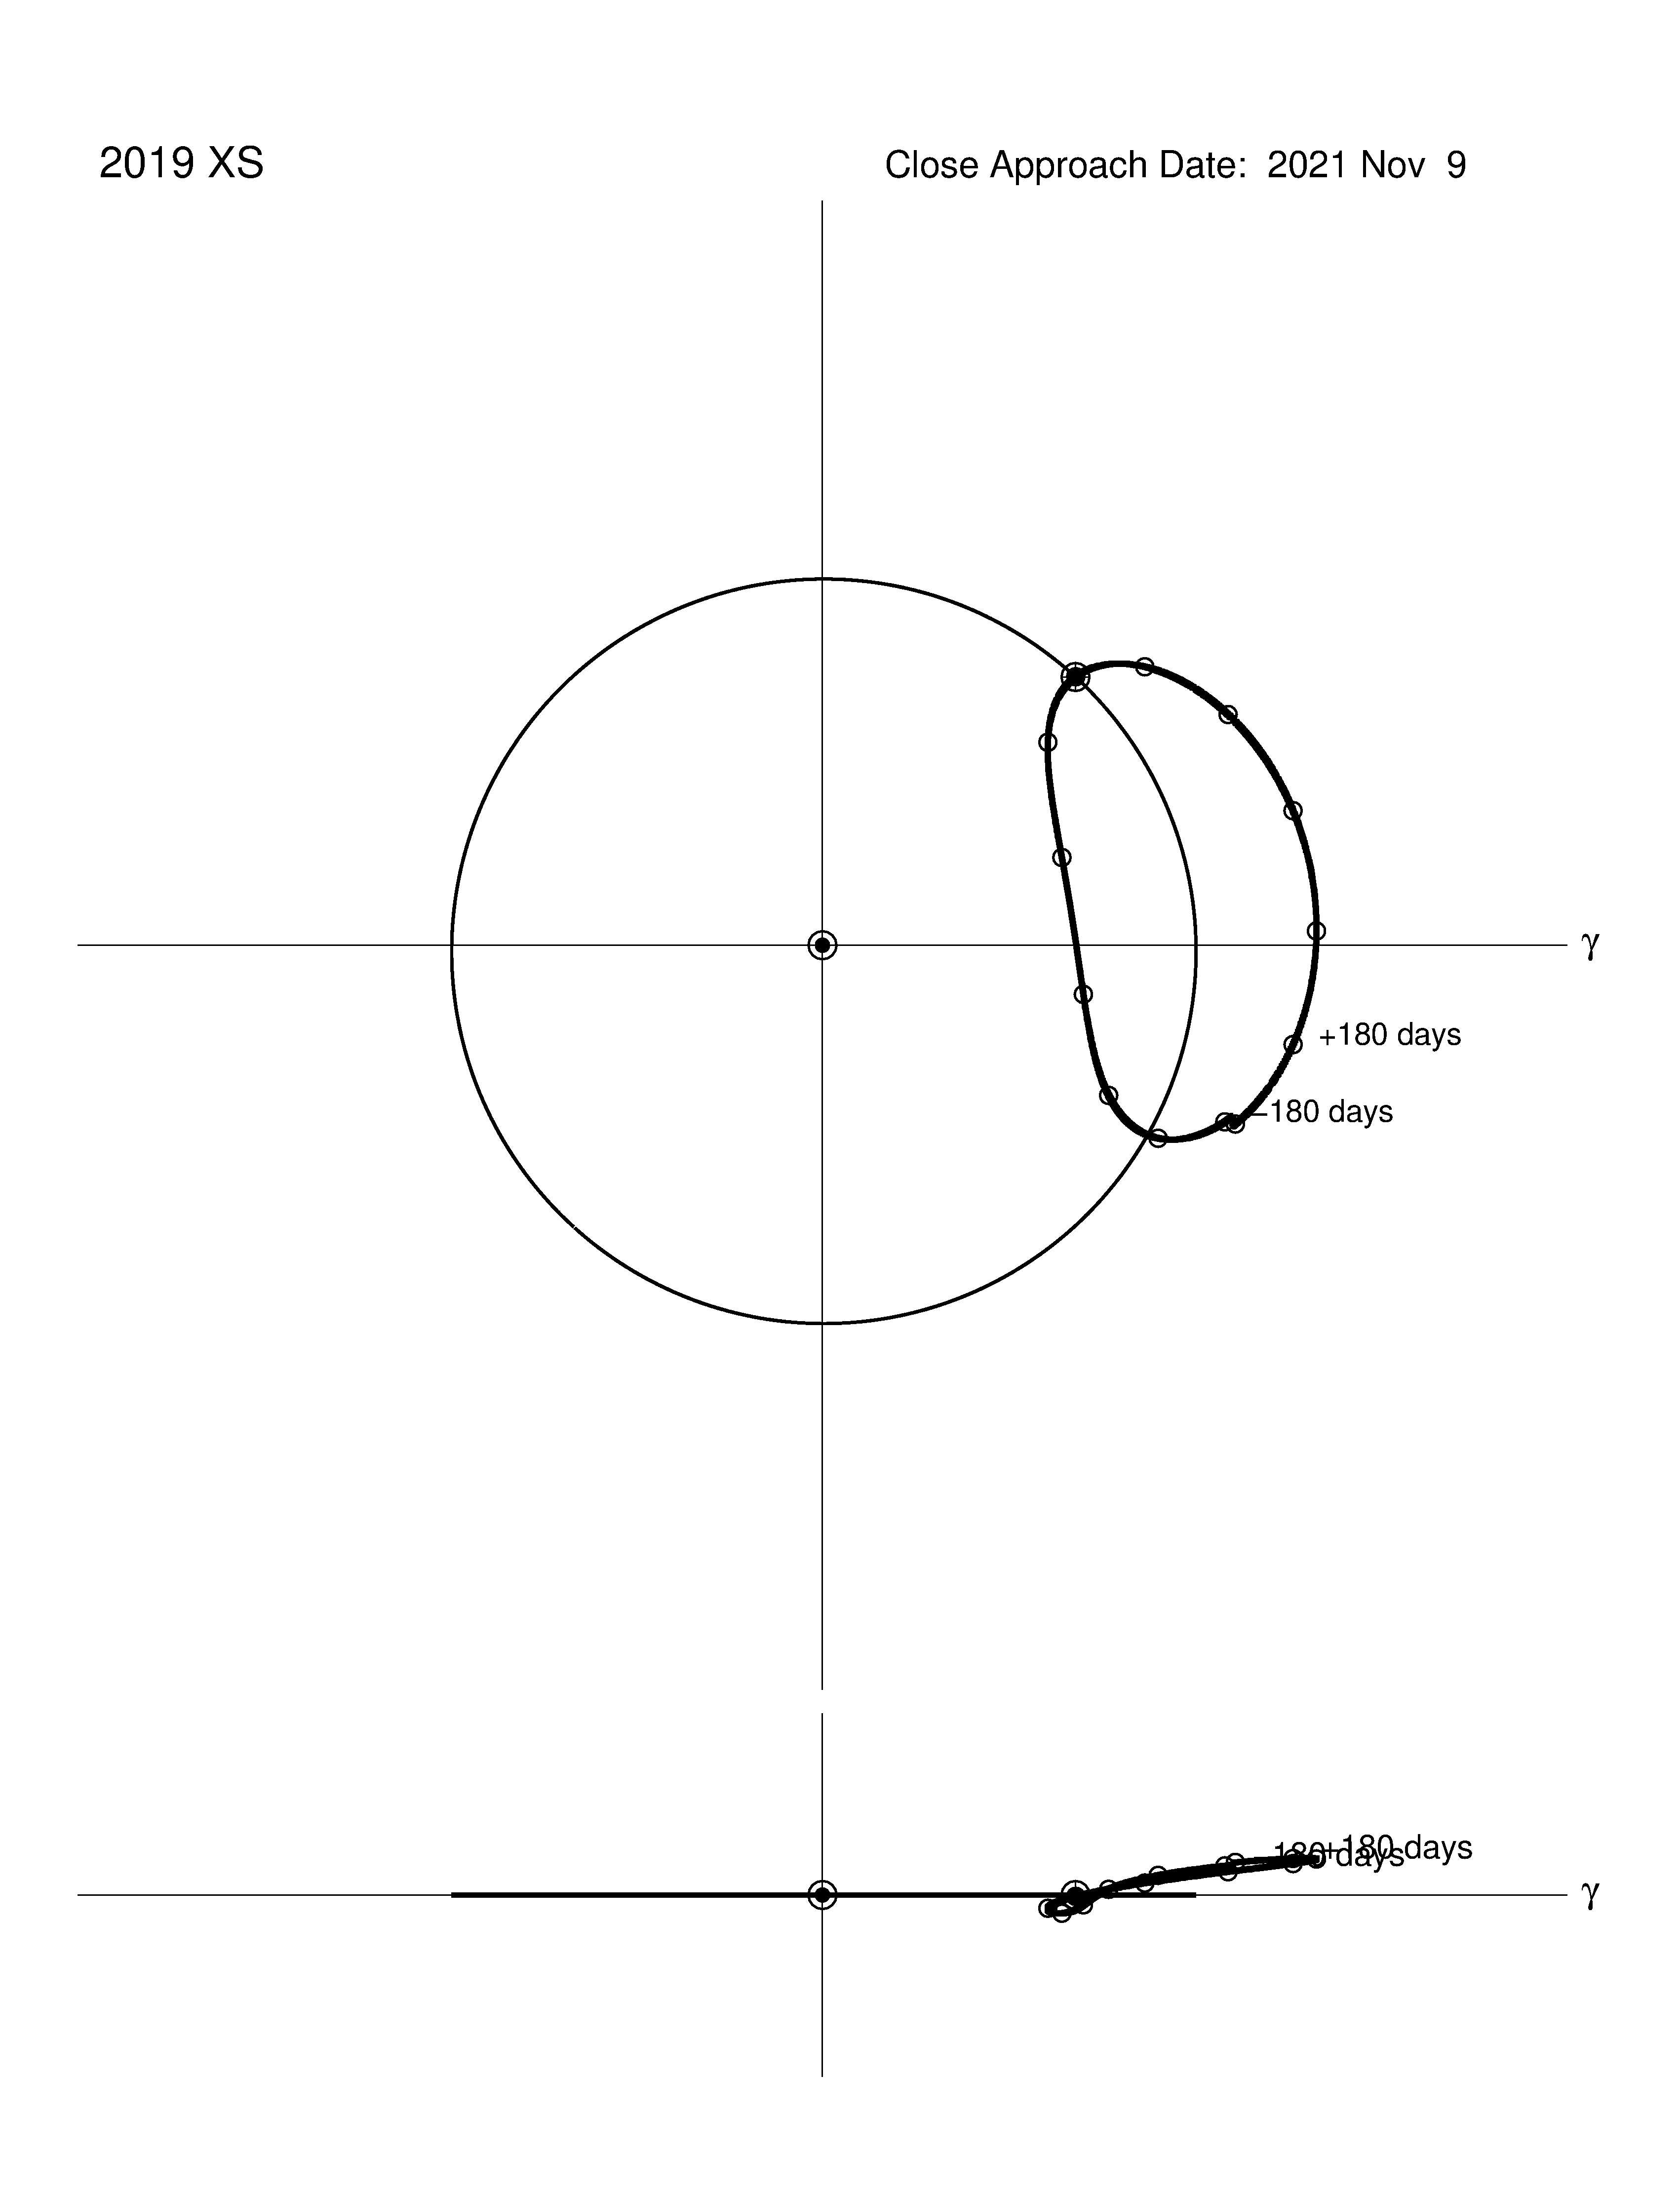 Plot of 2019 XS' orbit in Earth-co-orbital frame.